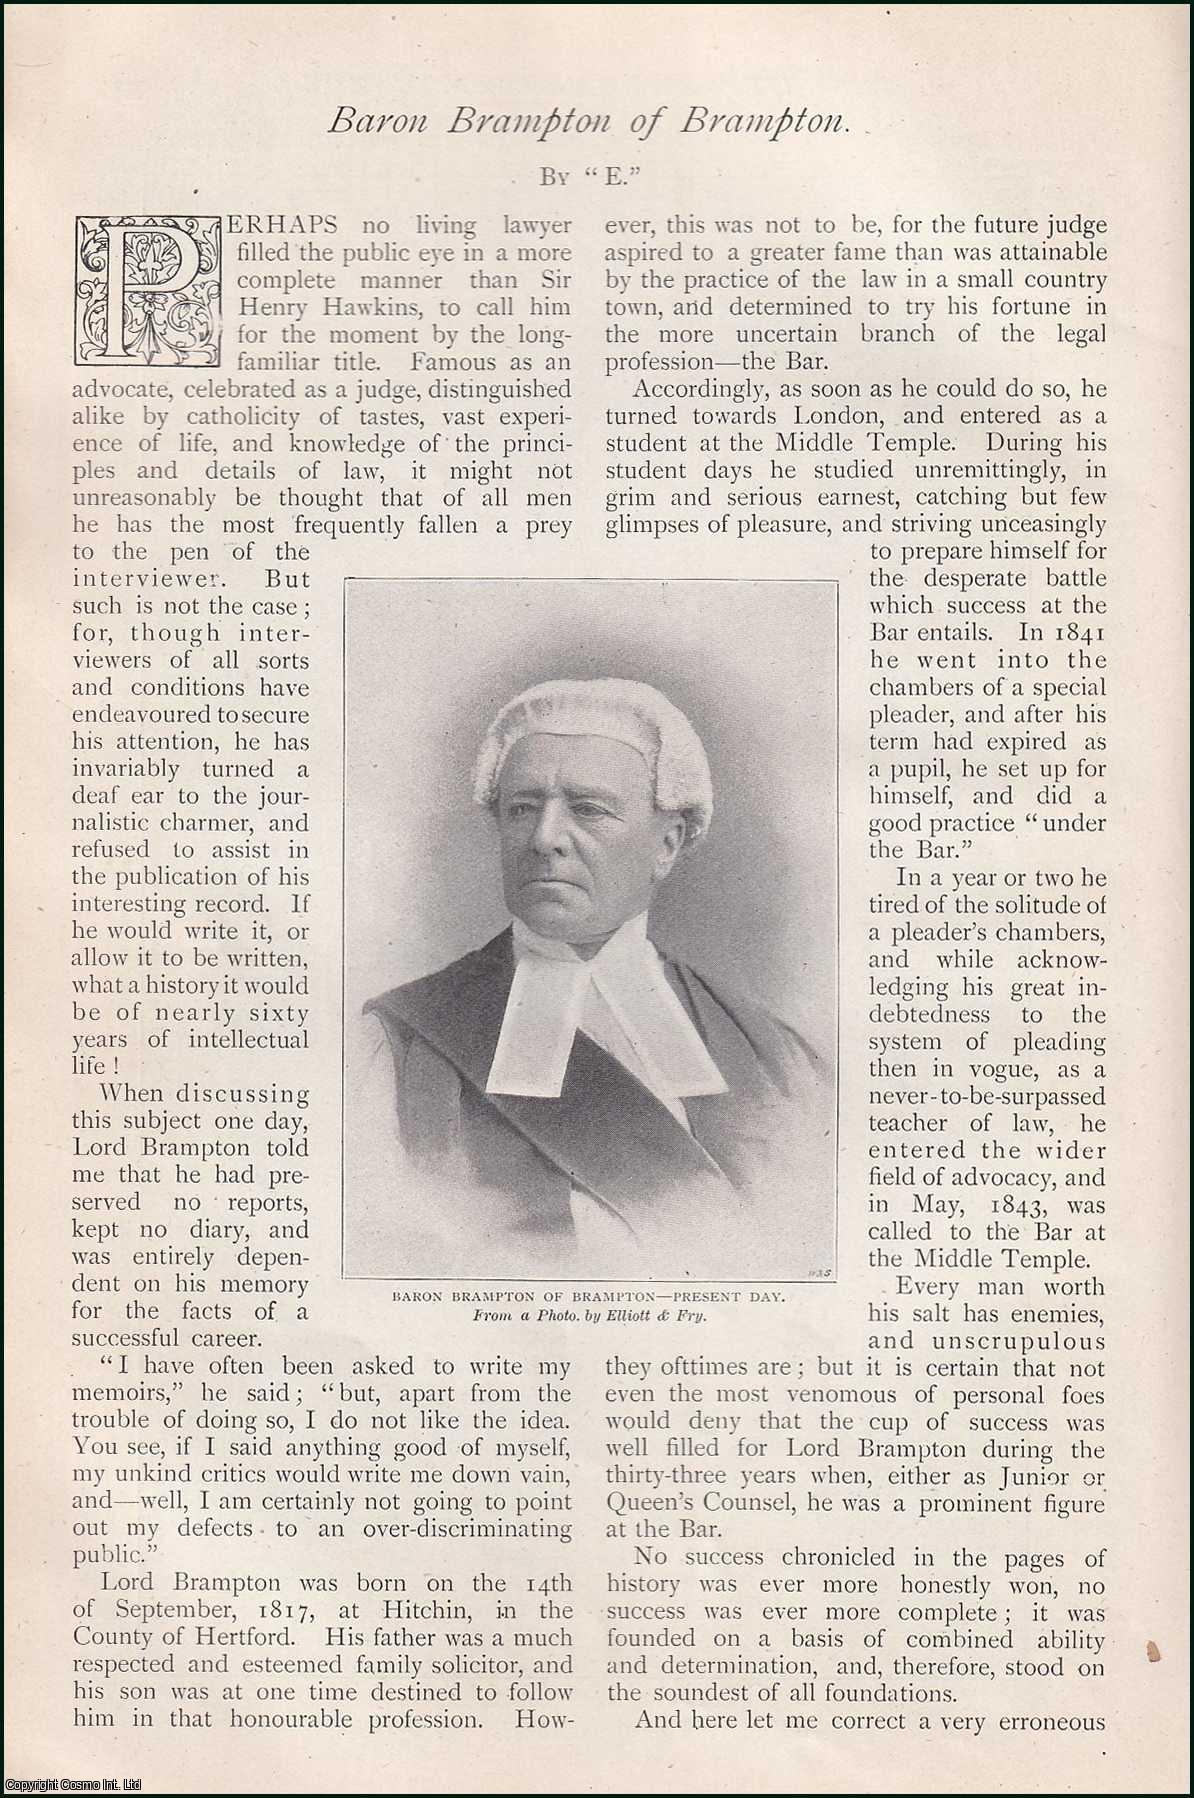 E. - Baron Brampton, Sir Henry Hawkins of Brampton. An uncommon original article from The Strand Magazine, 1899.